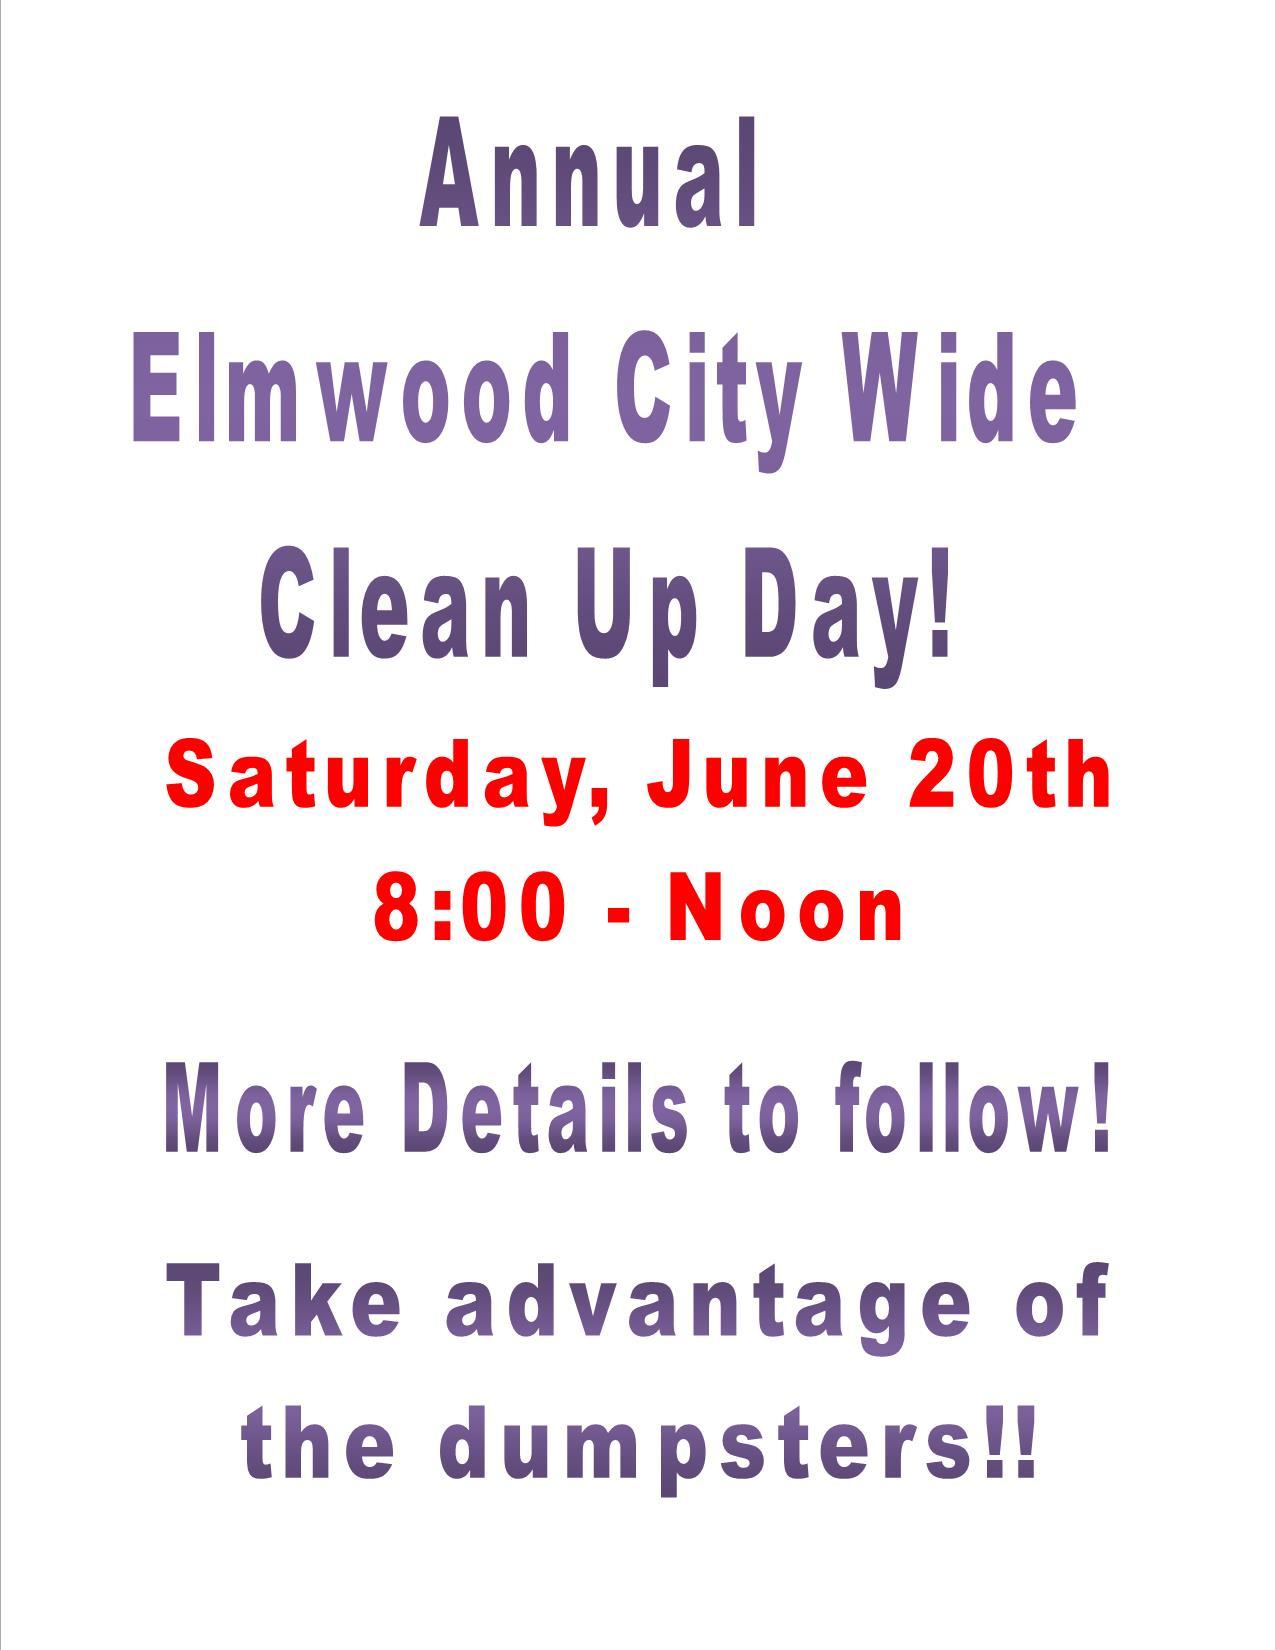 Elmwood City Wide Clean up